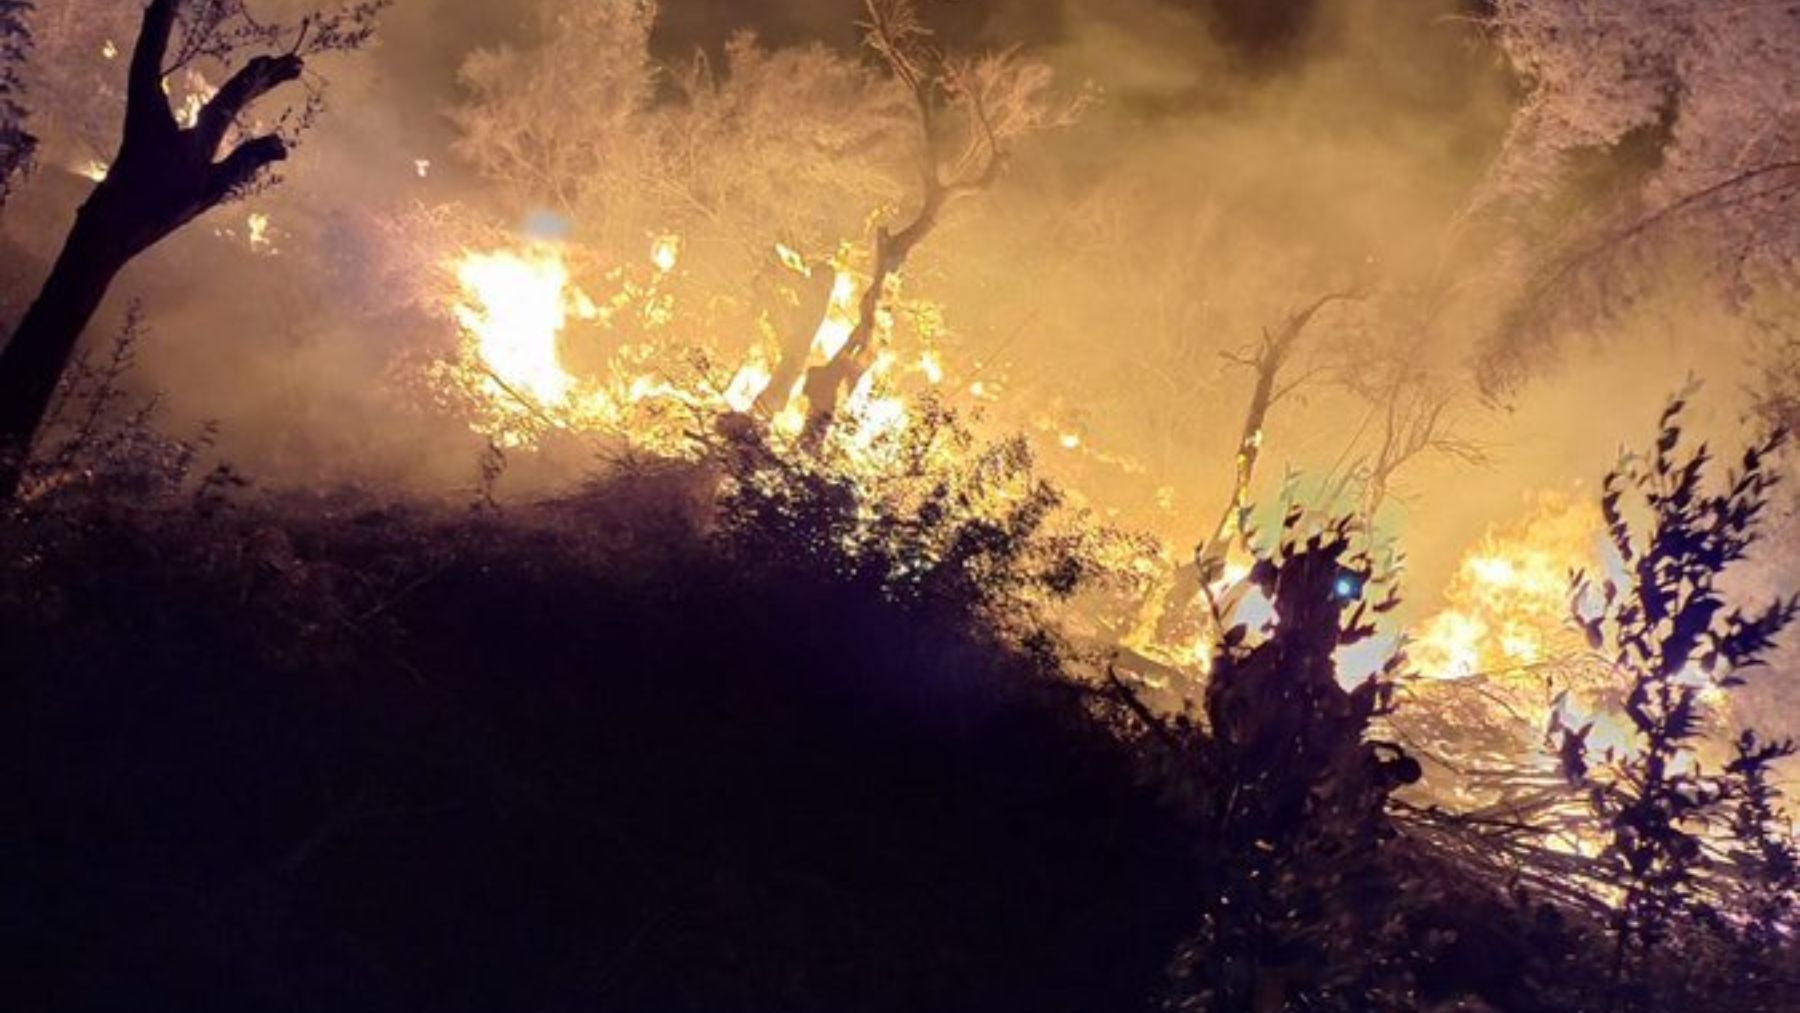 Incendio forestal en la zona de Bens d’Avall, Sóller.